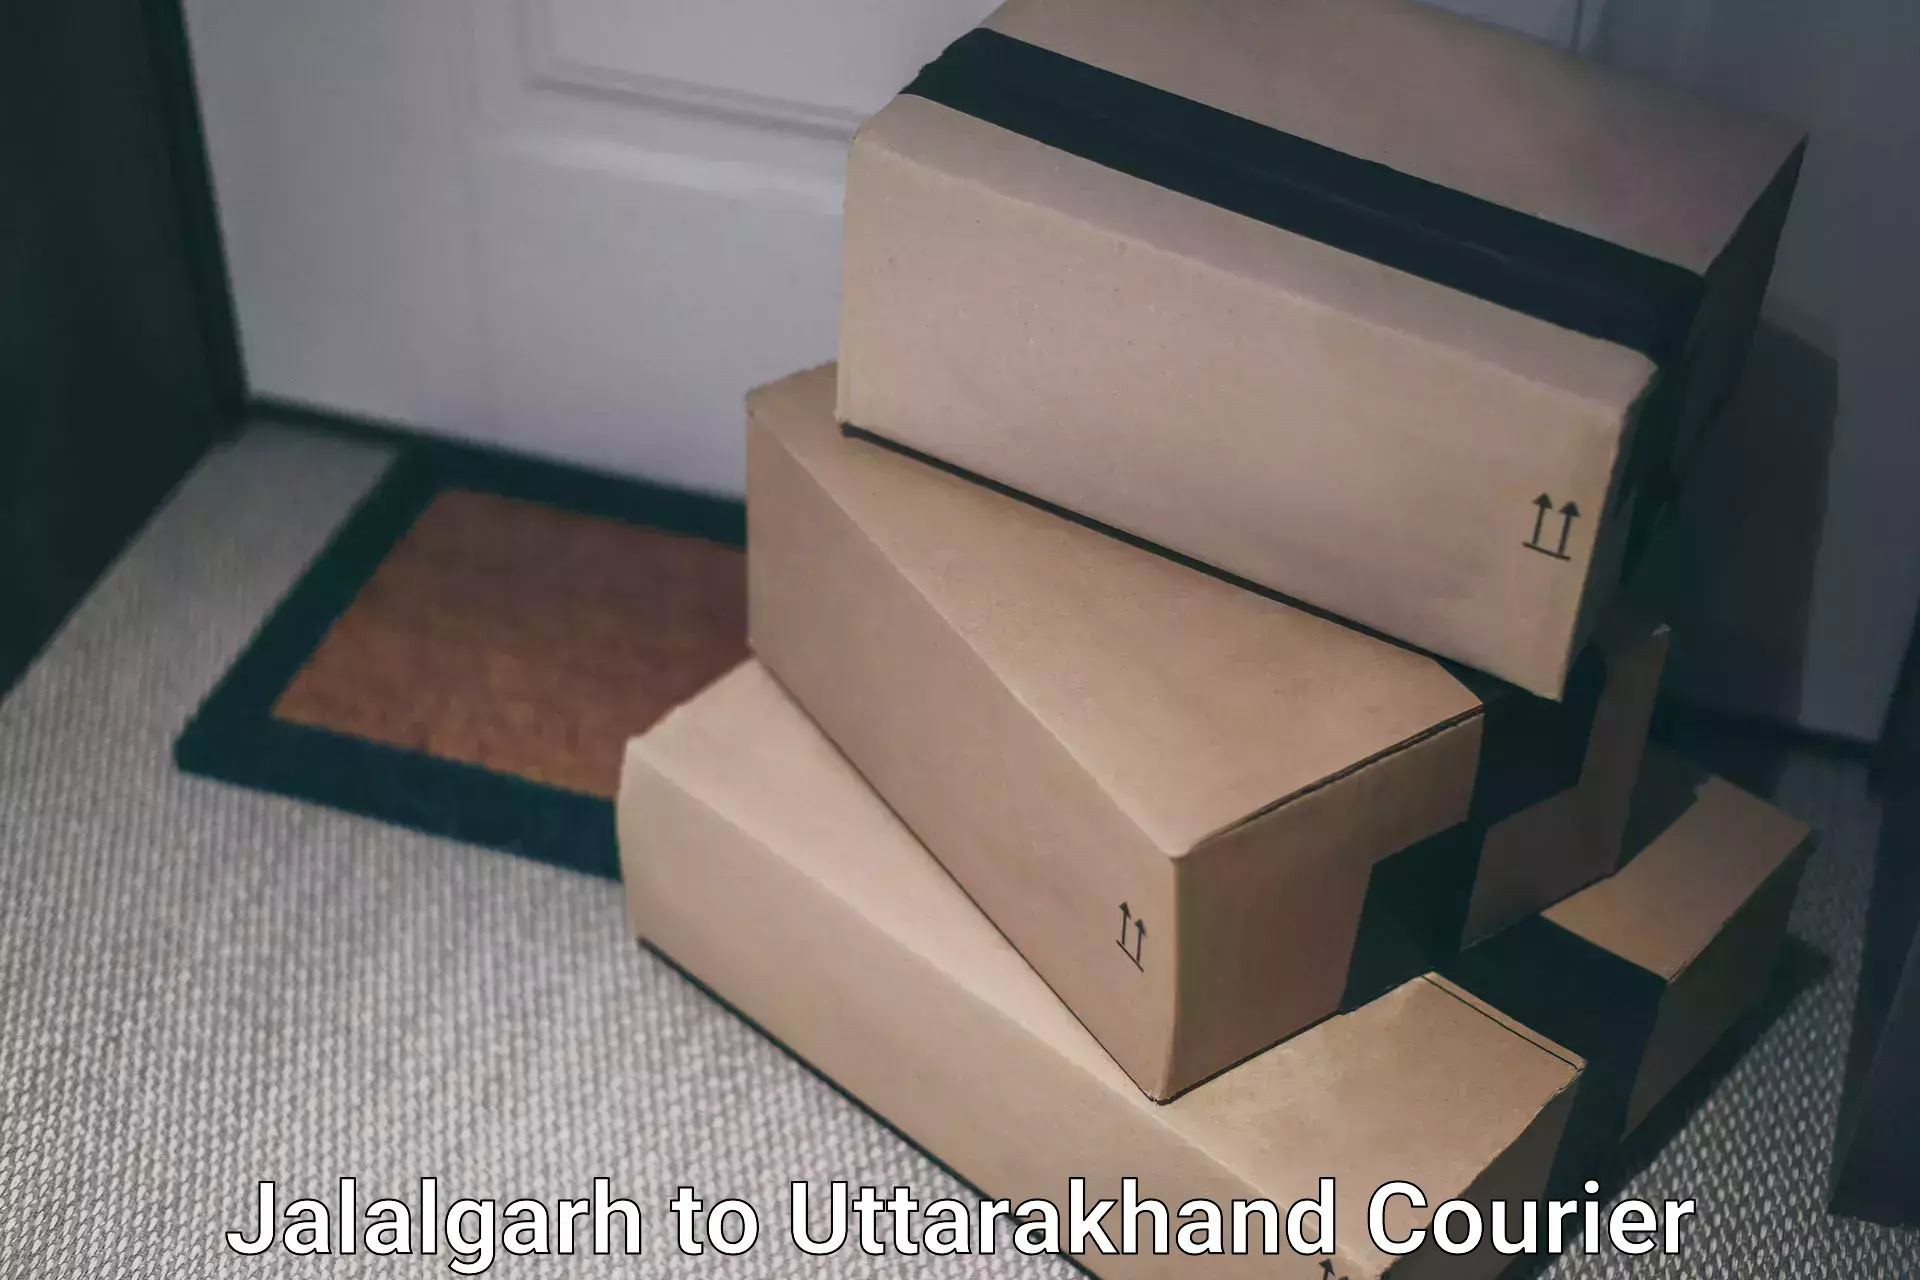 Efficient order fulfillment in Jalalgarh to Sitarganj